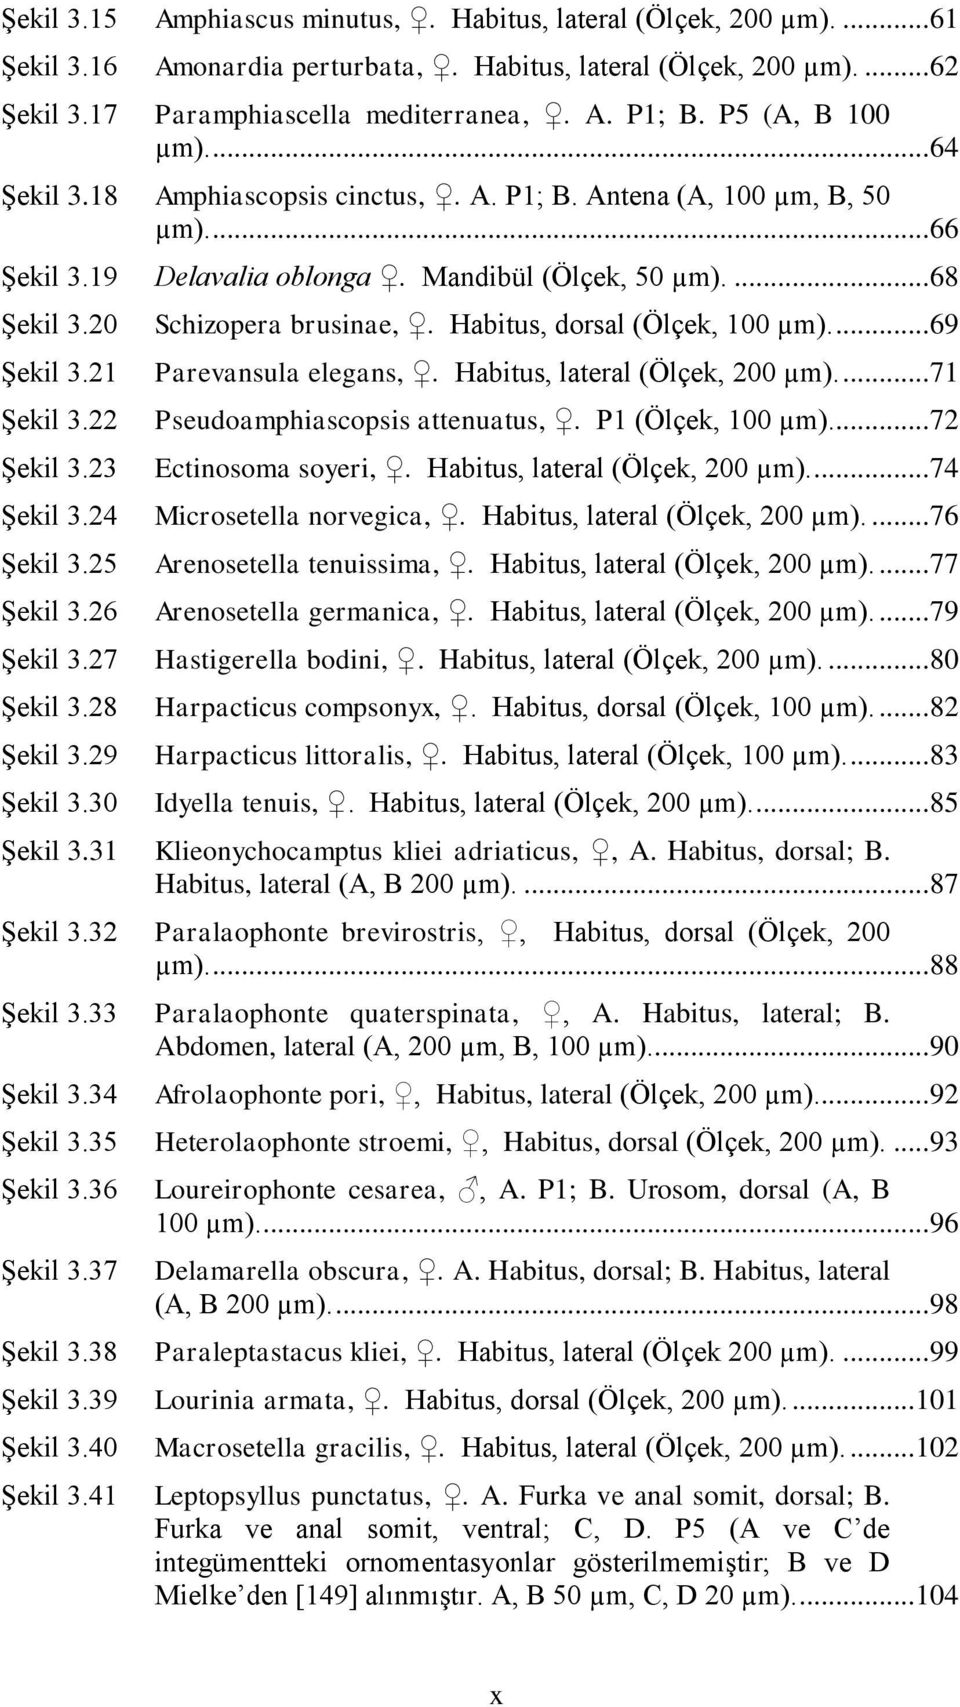 Habitus, dorsal (Ölçek, 100 µm).... 69 ġekil 3.21 Parevansula elegans,. Habitus, lateral (Ölçek, 200 µm).... 71 ġekil 3.22 Pseudoamphiascopsis attenuatus,. P1 (Ölçek, 100 µm).... 72 ġekil 3.